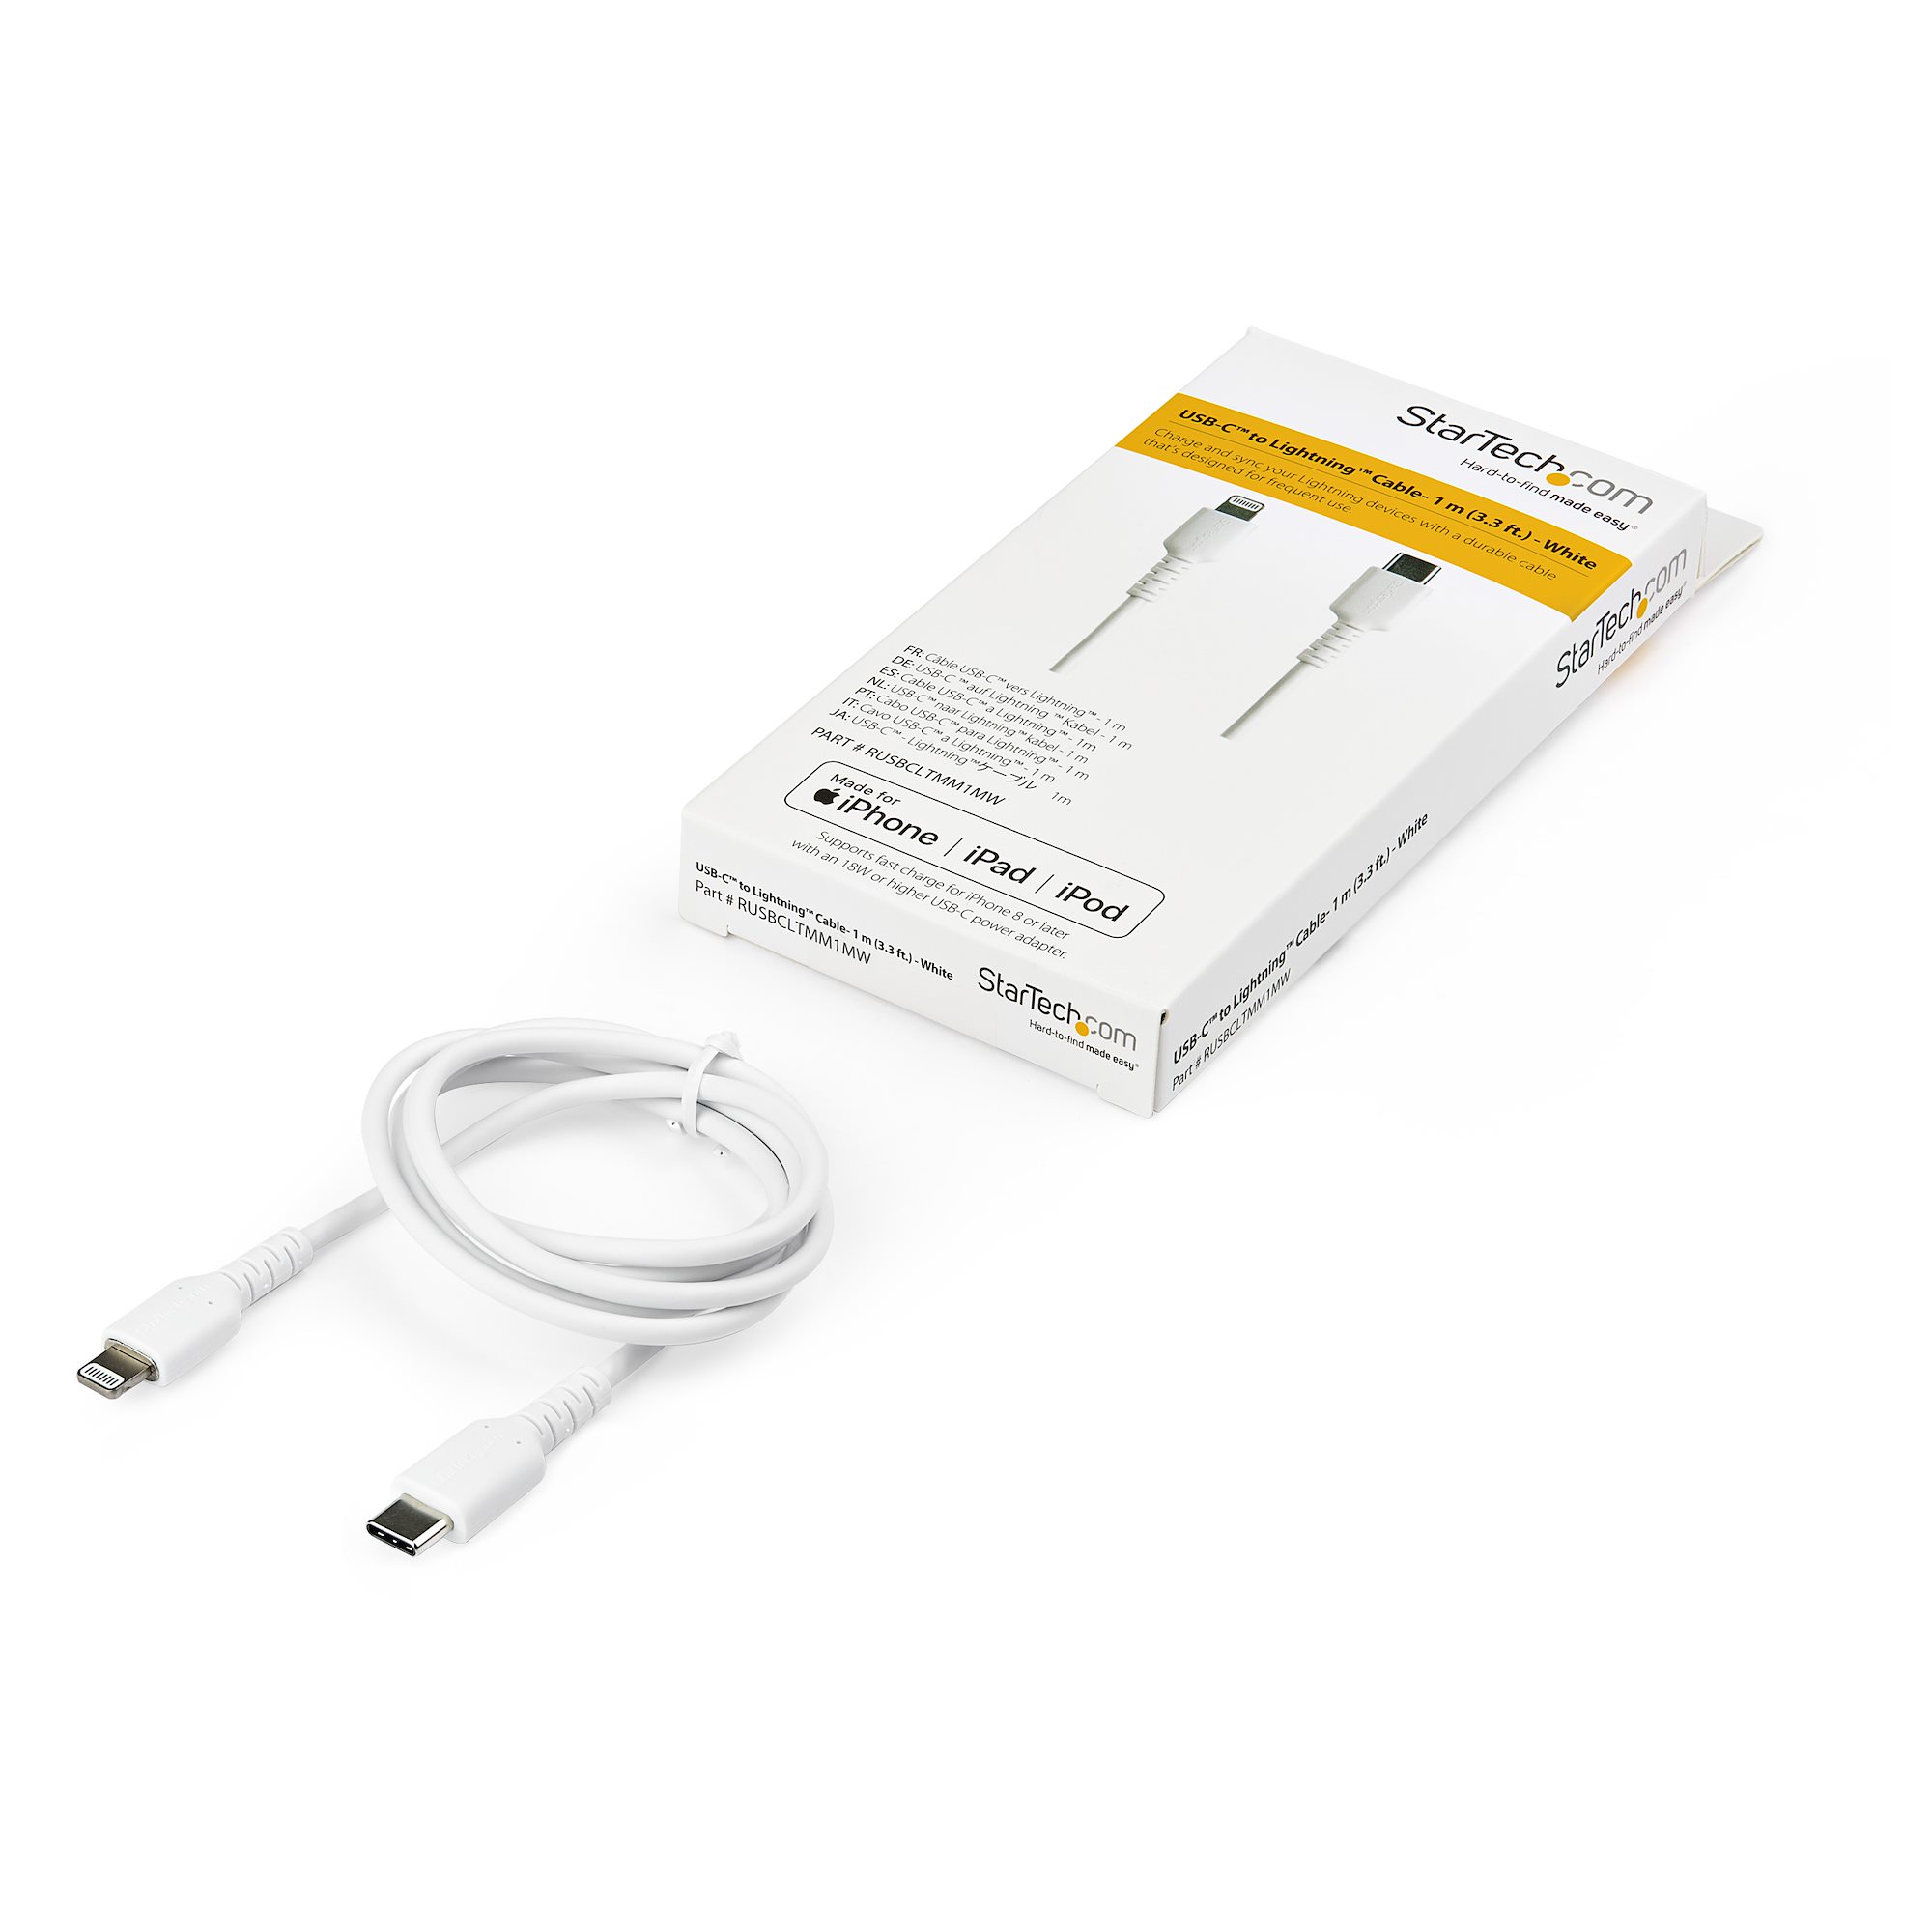 / Adaptateur Lightning vers USB pour iPhone et iPad